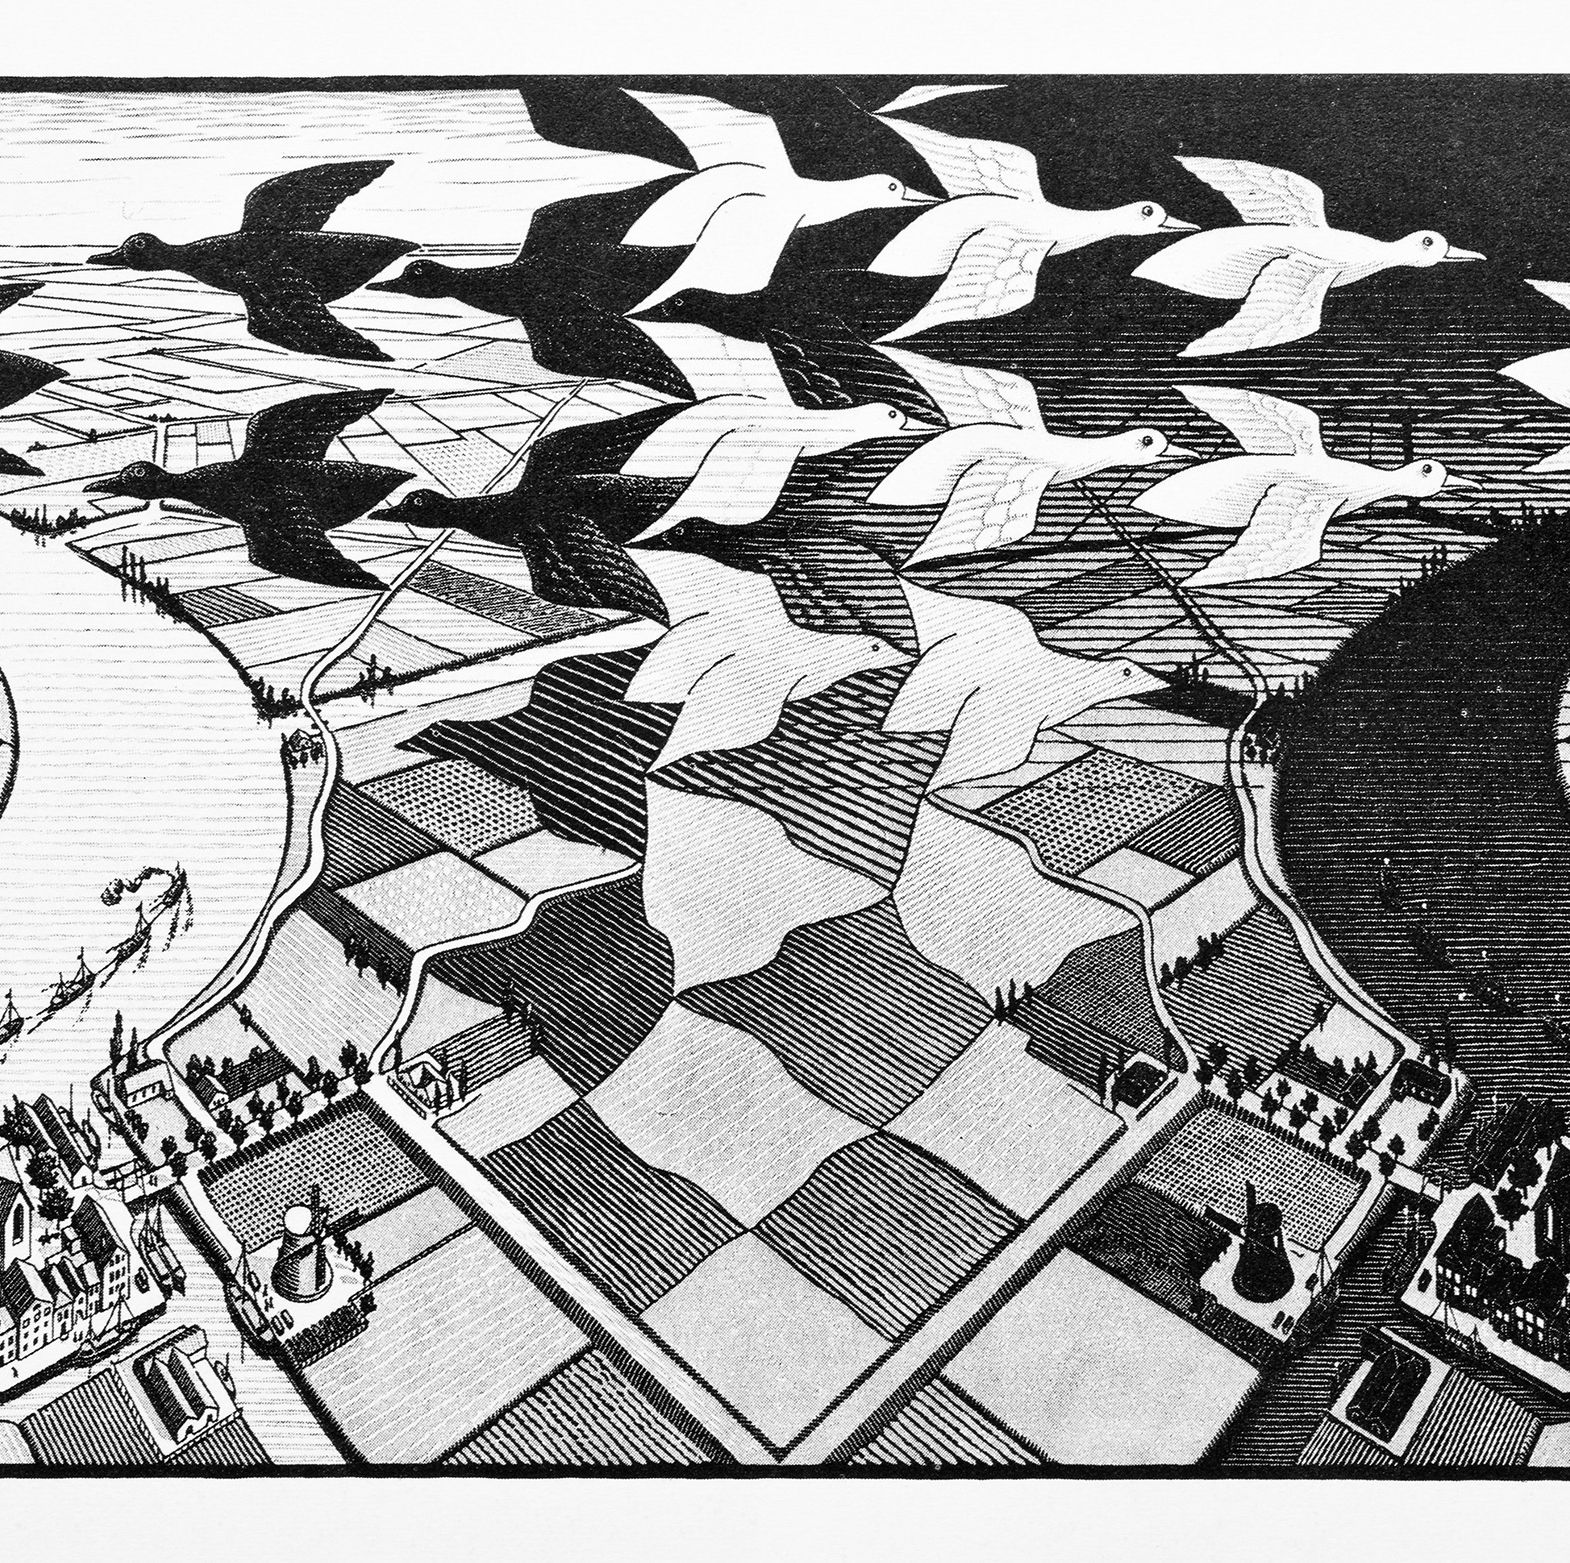 To Create His Geometric Artwork, M.C. Escher Had to Learn Math the Hard Way